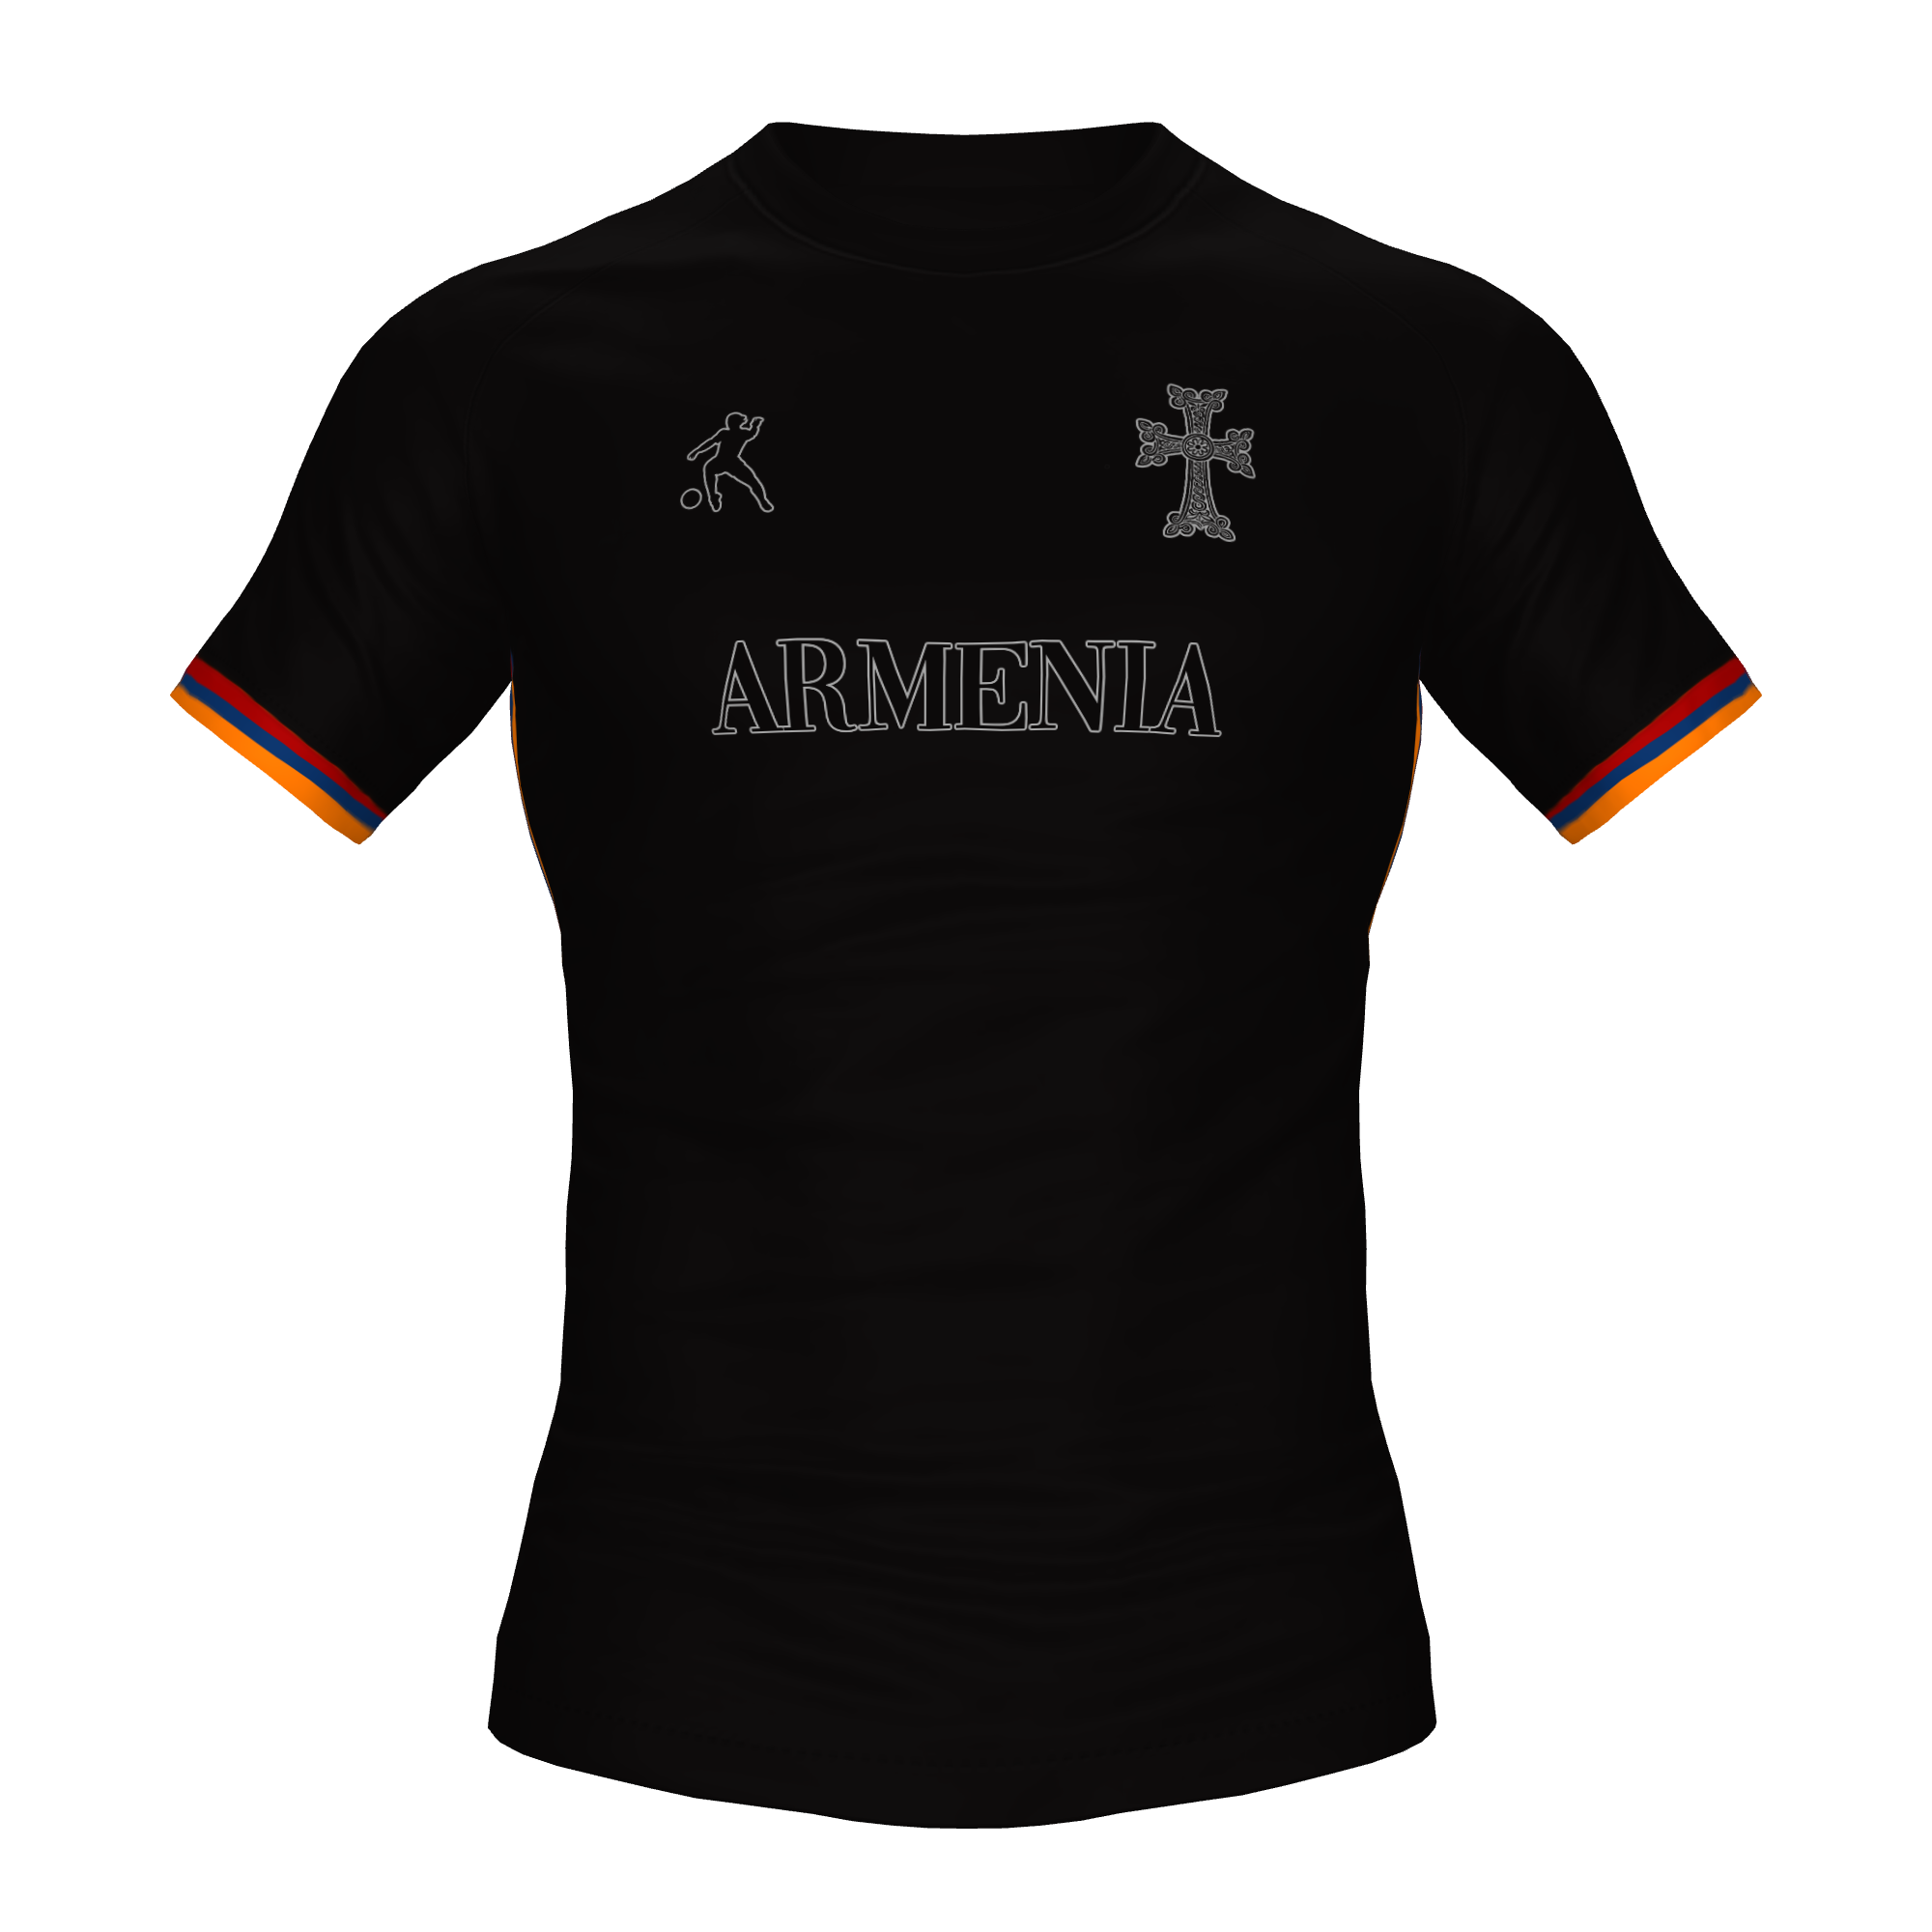 ARMENIA FOOTBALL SHIRT